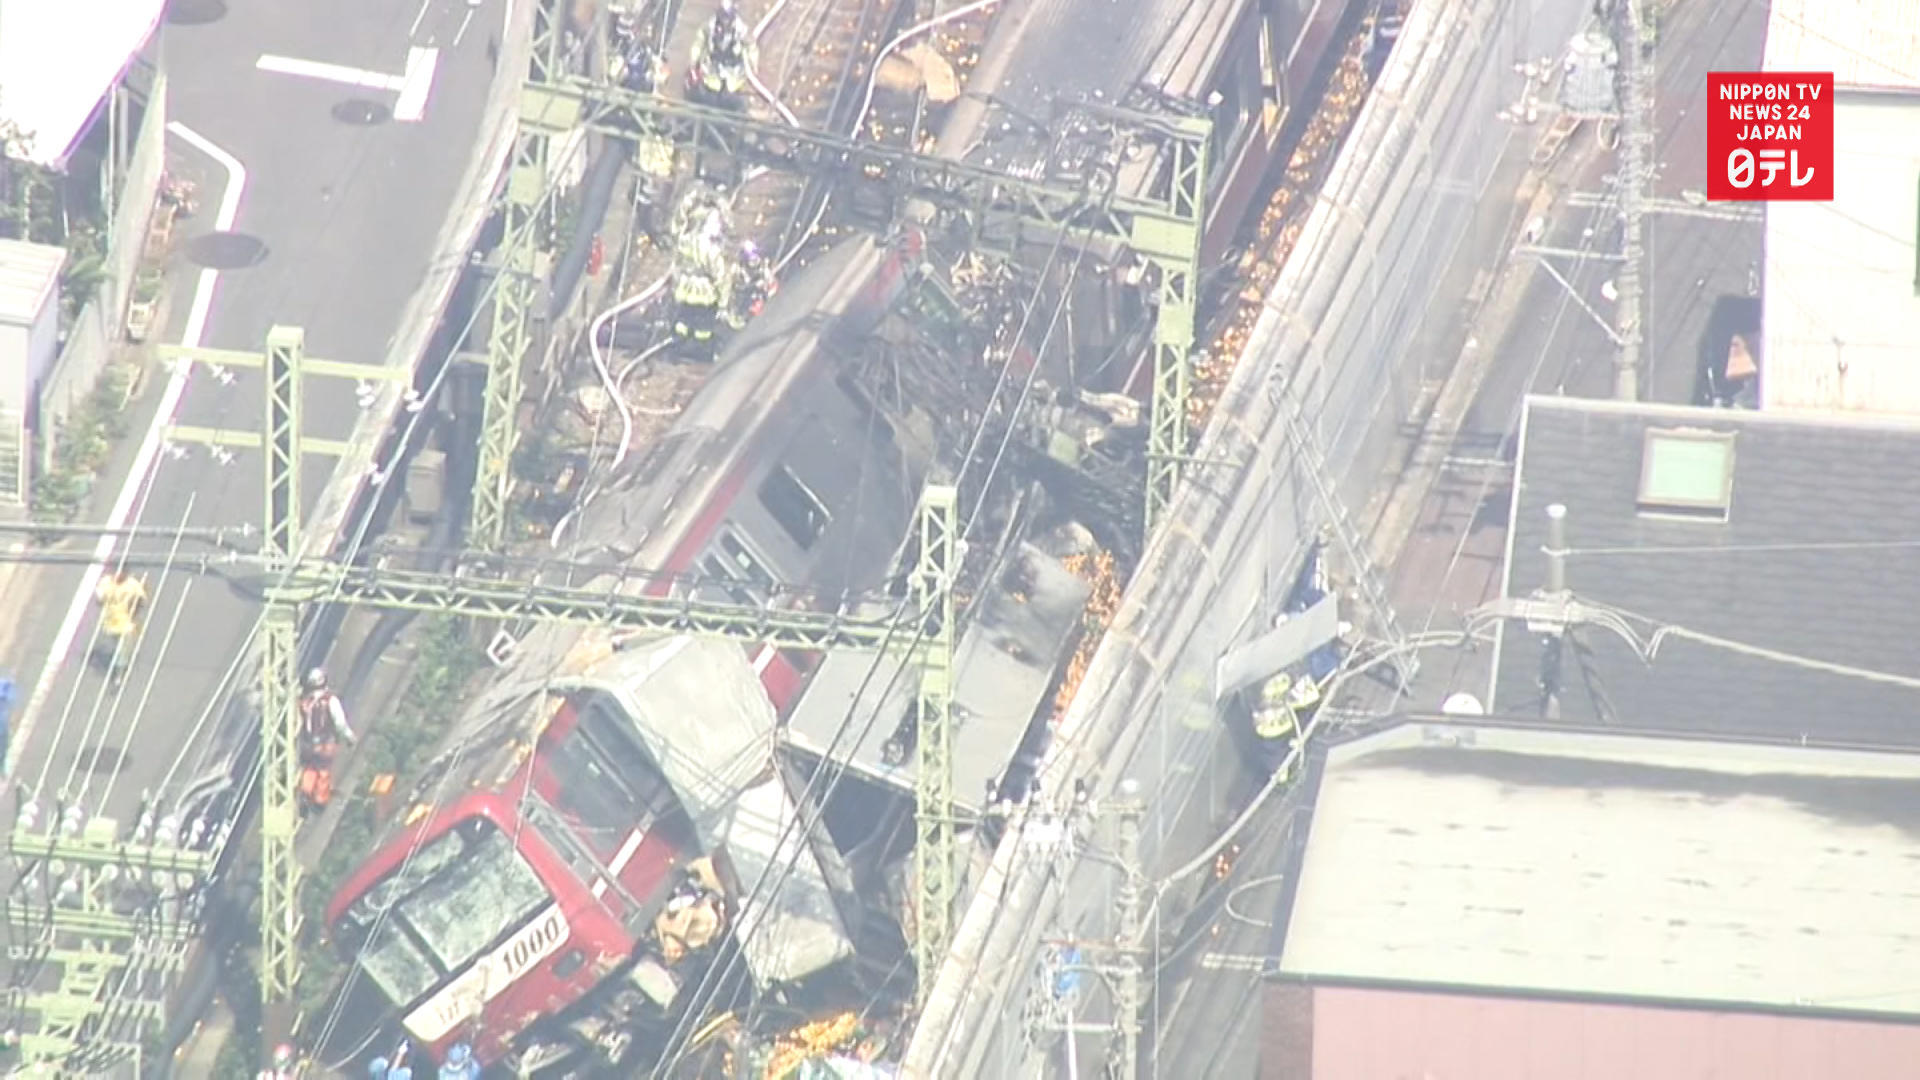 30 injured in truck-train collision in Yokohama